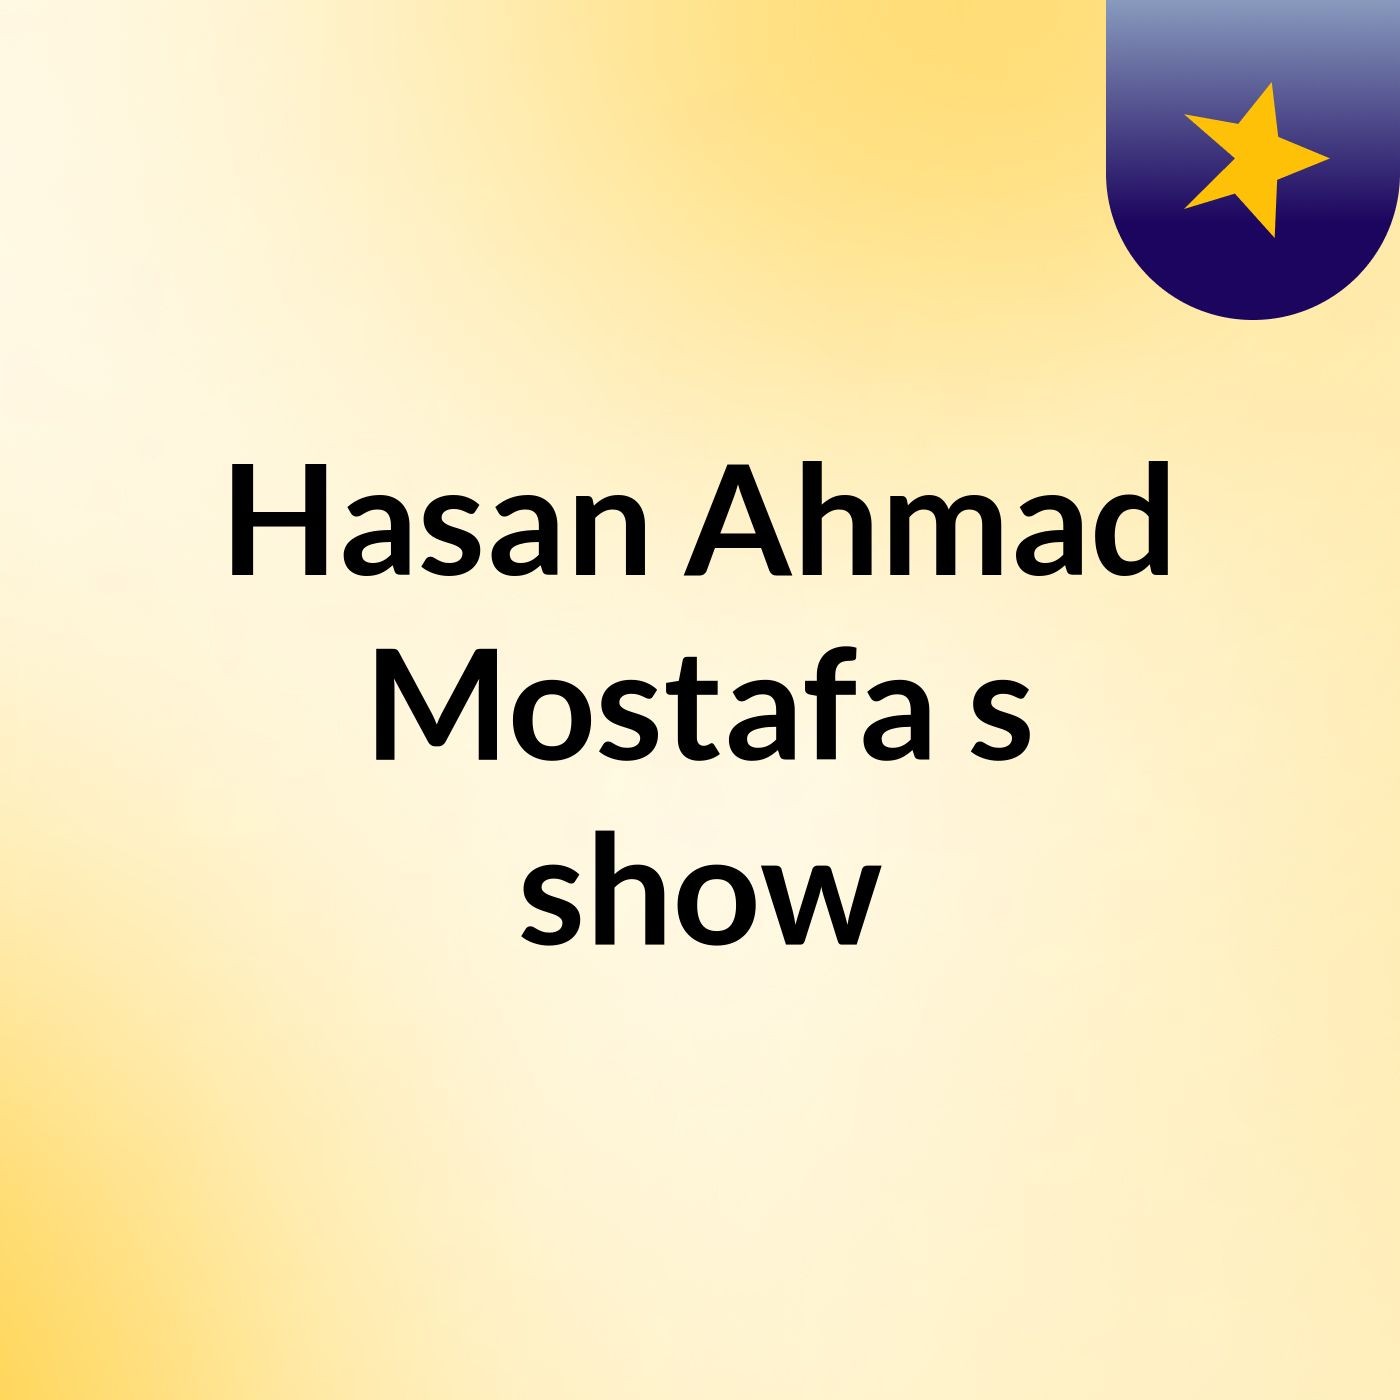 Hasan Ahmad Mostafa's show